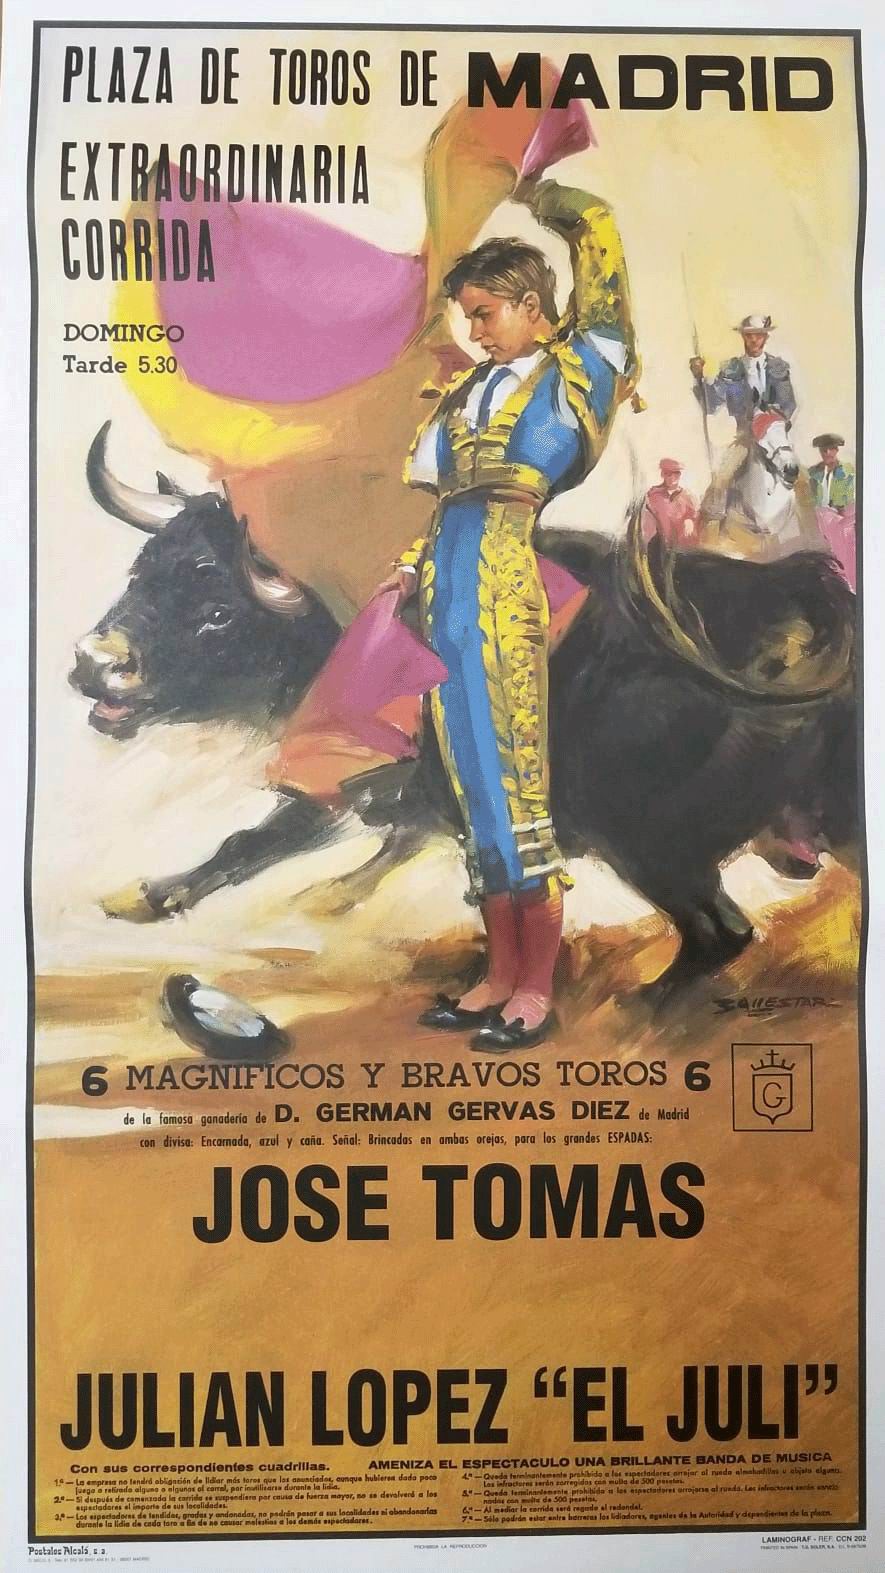 Poster of the Monumental Bullfighting of Madrid. Bullfighters Jose Tomas y Julian López 